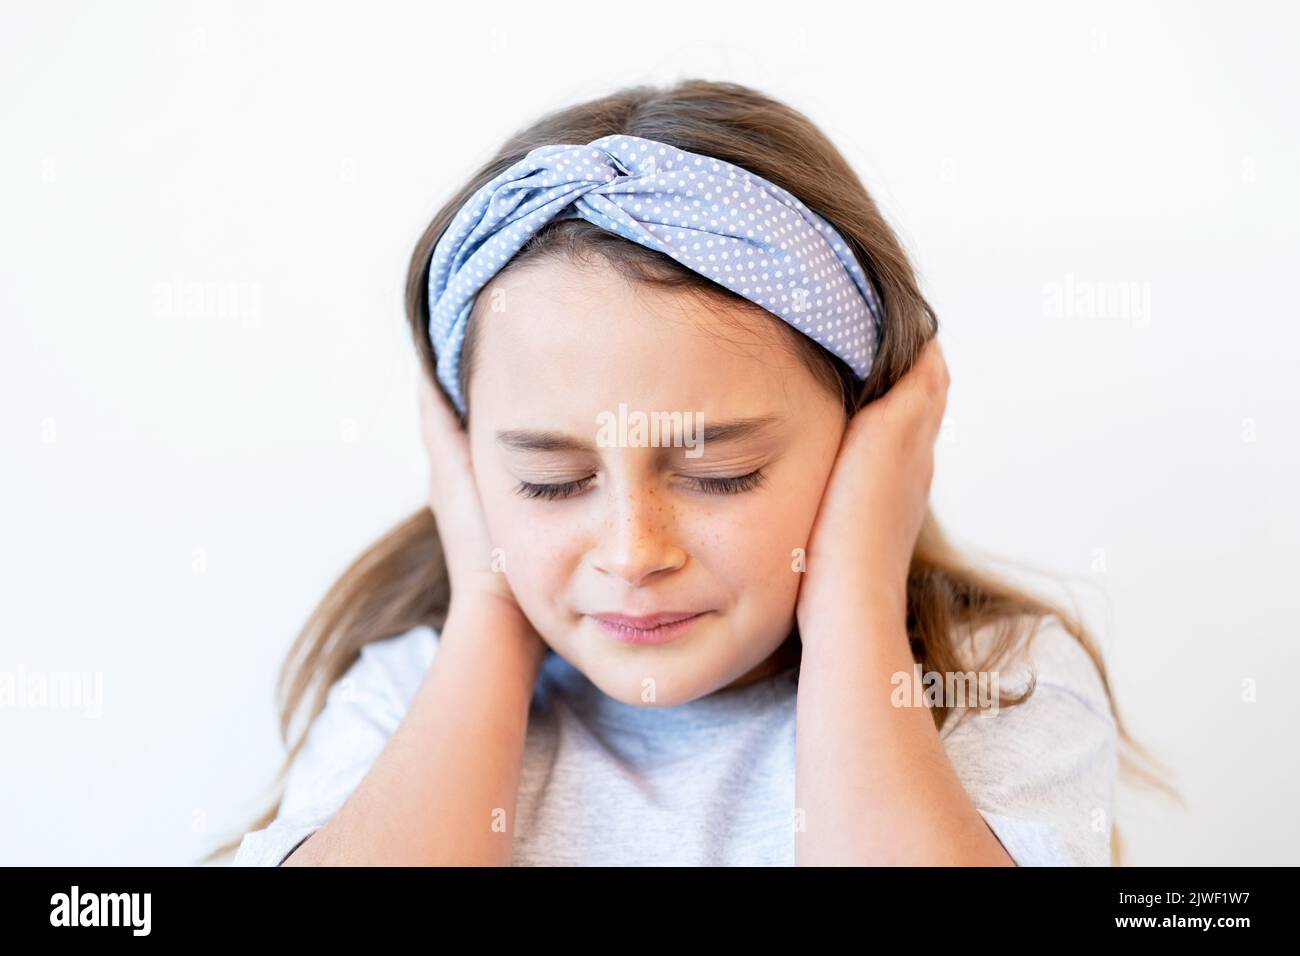 child headache stress anxiety girl clutching head Stock Photo